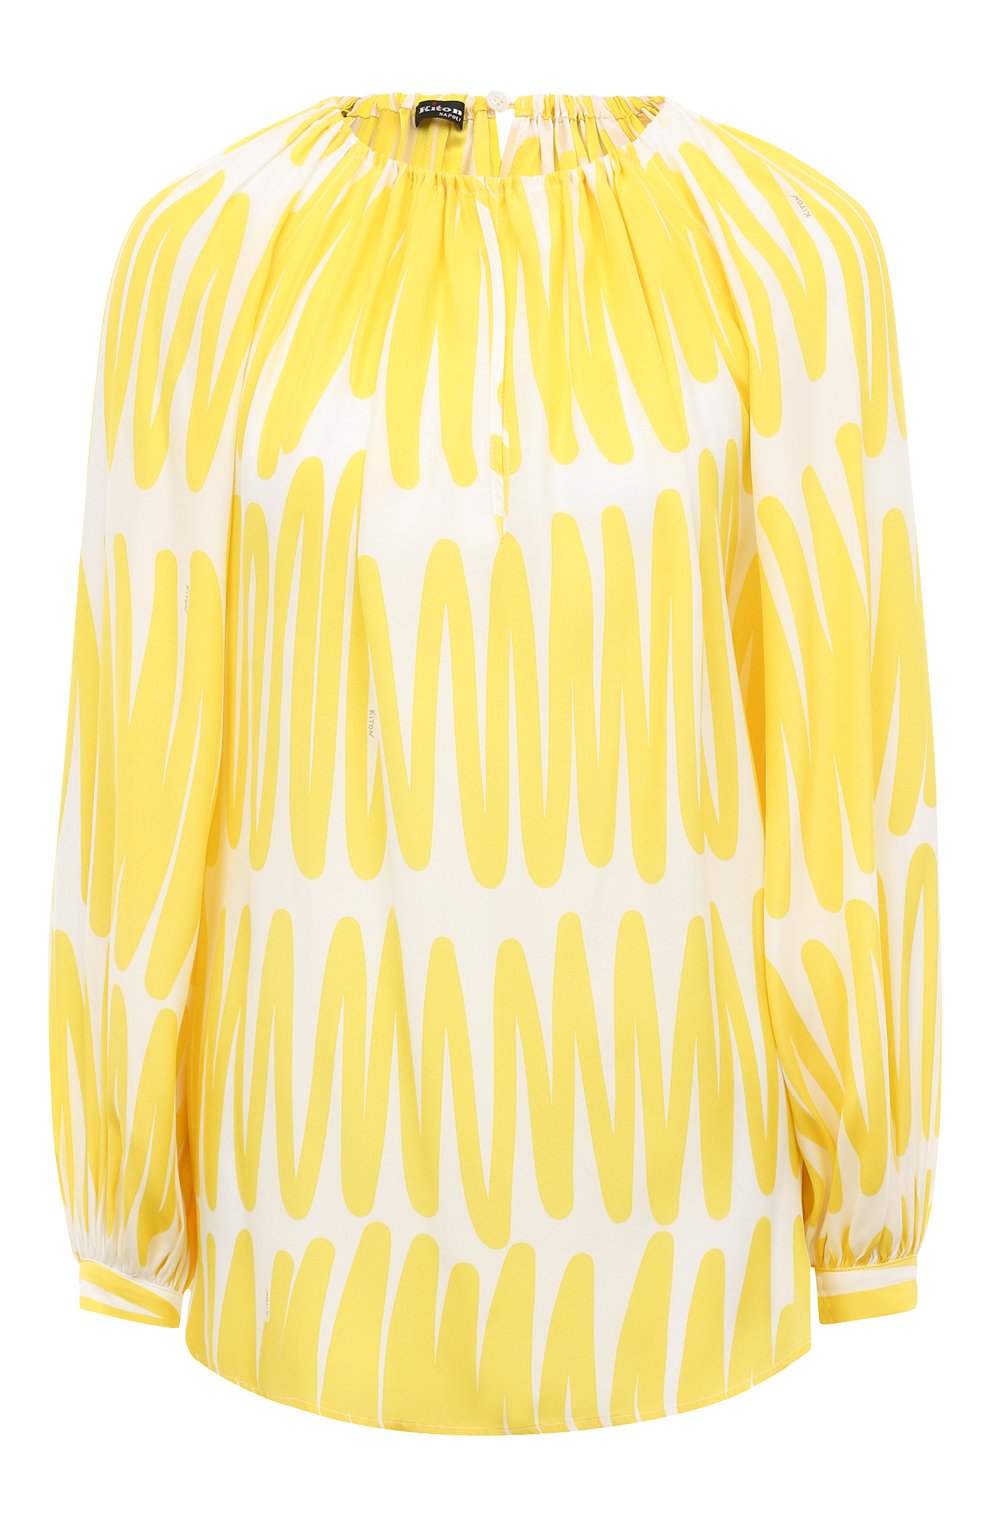 Блузы Kiton, Шелковая блузка Kiton, Италия, Жёлтый, Шелк: 100%;, 13130531  - купить